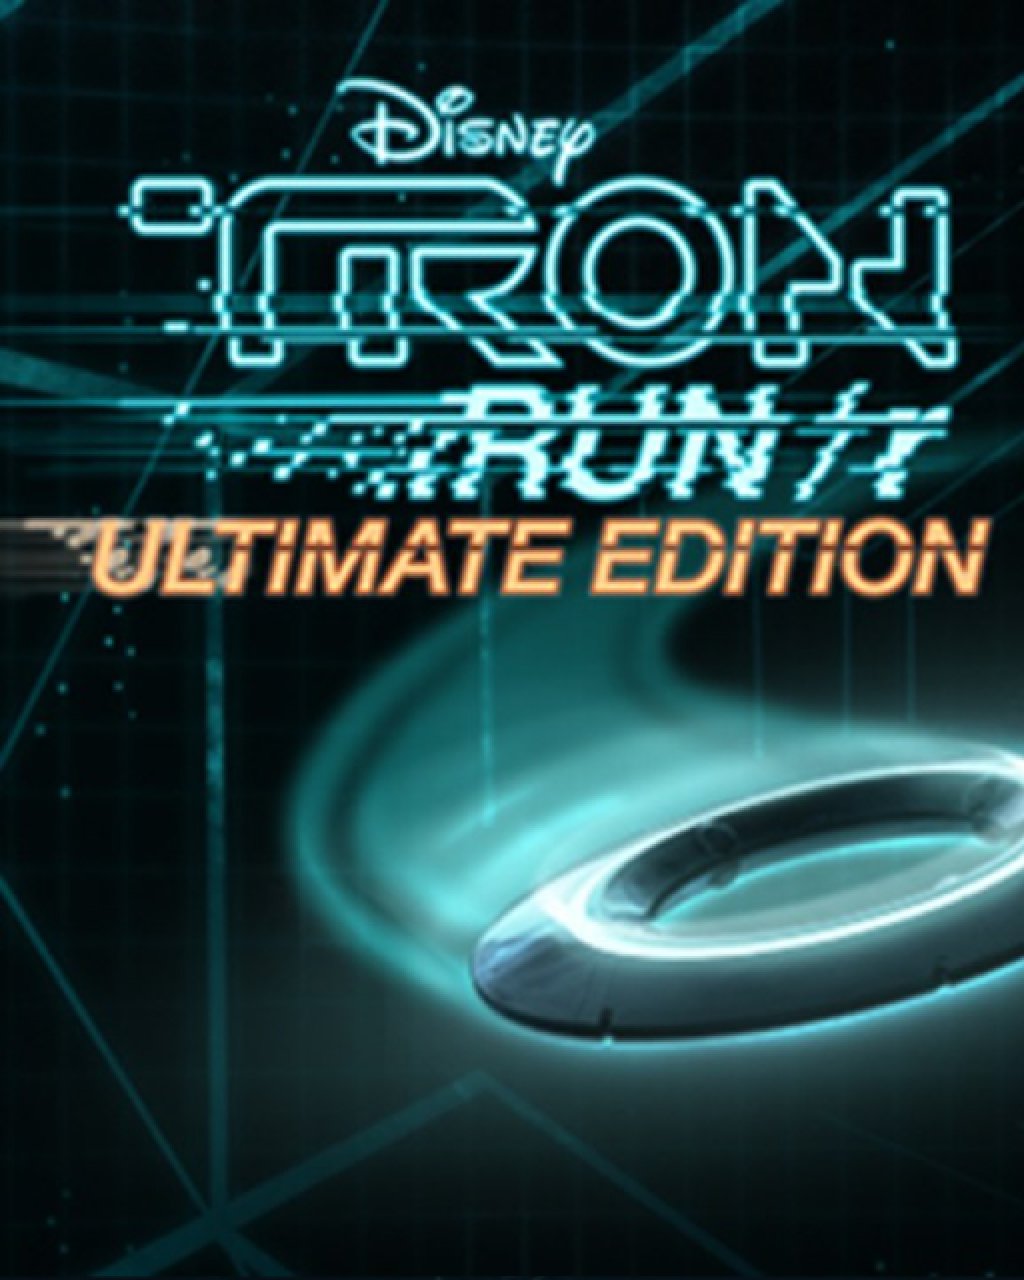 TRON RUN/r Ultimate Edition